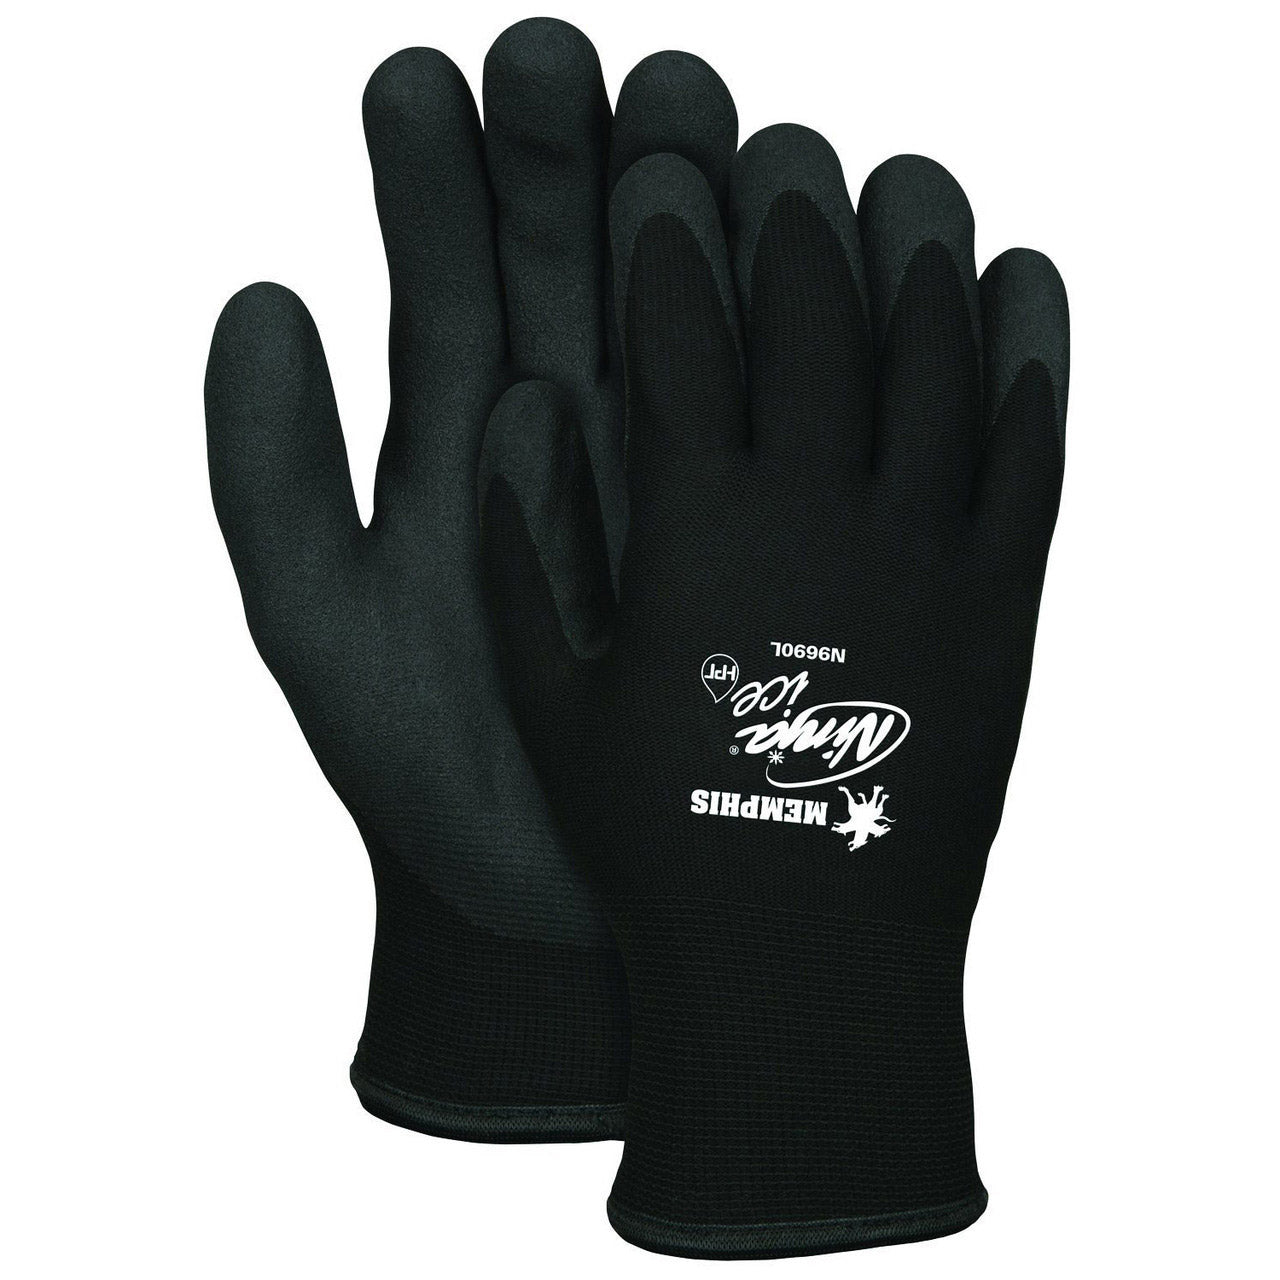 Showa Insulated Neoprene 12 Gauntlet Glove - 6781R-10